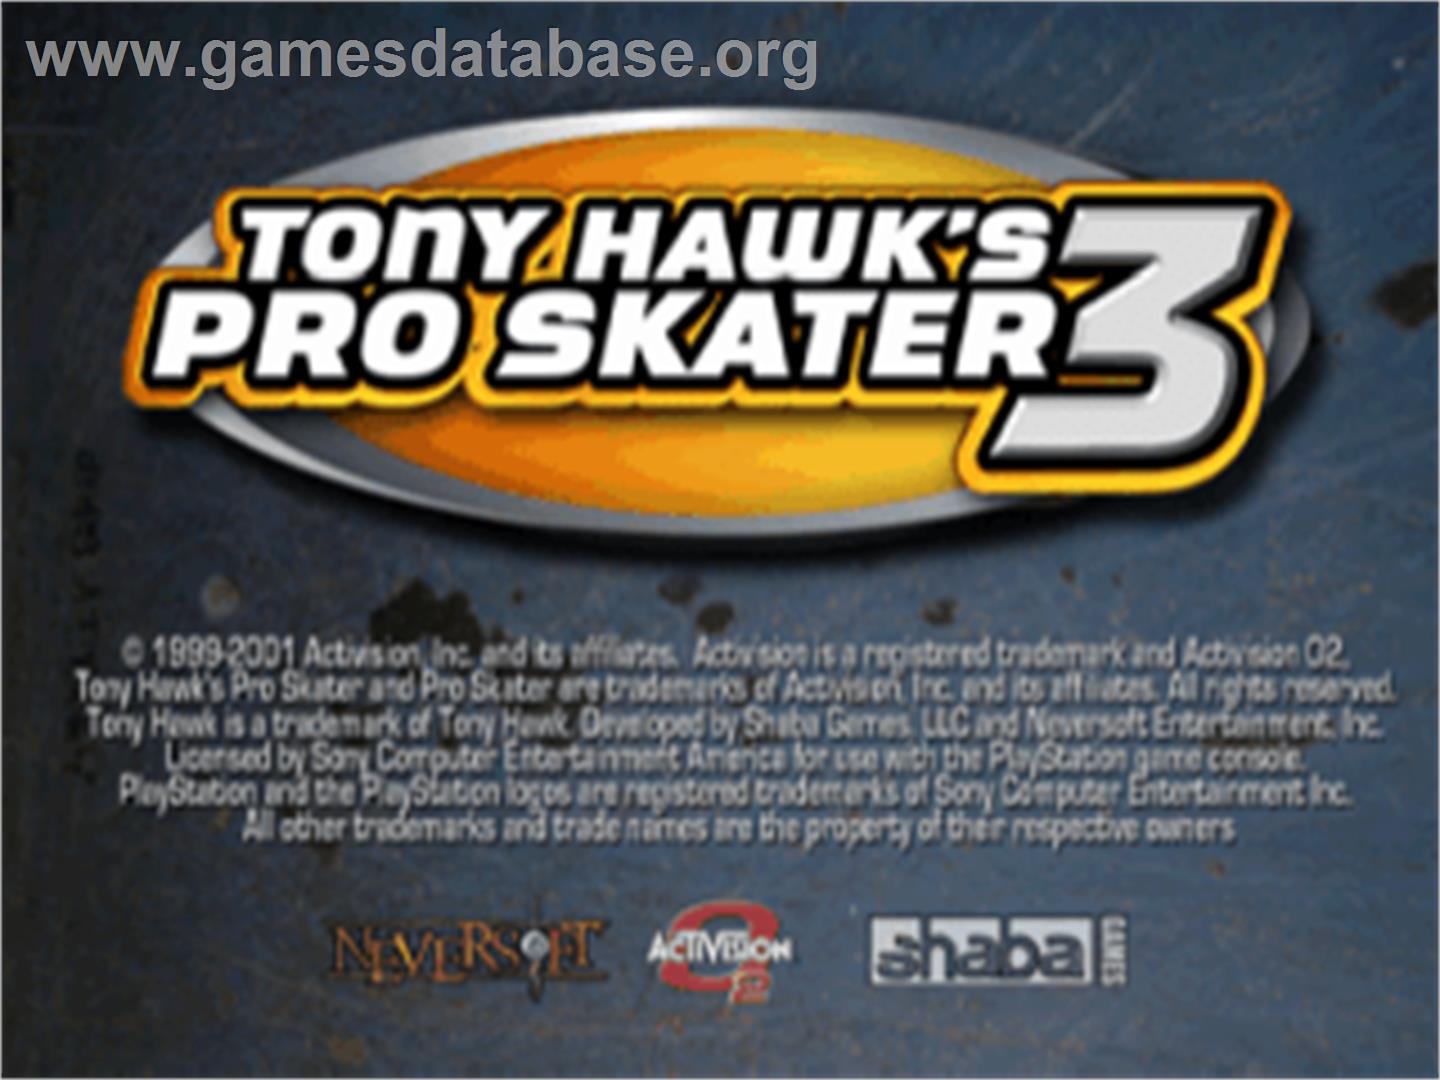 Tony Hawk's Pro Skater 3 - Sony Playstation - Artwork - Title Screen